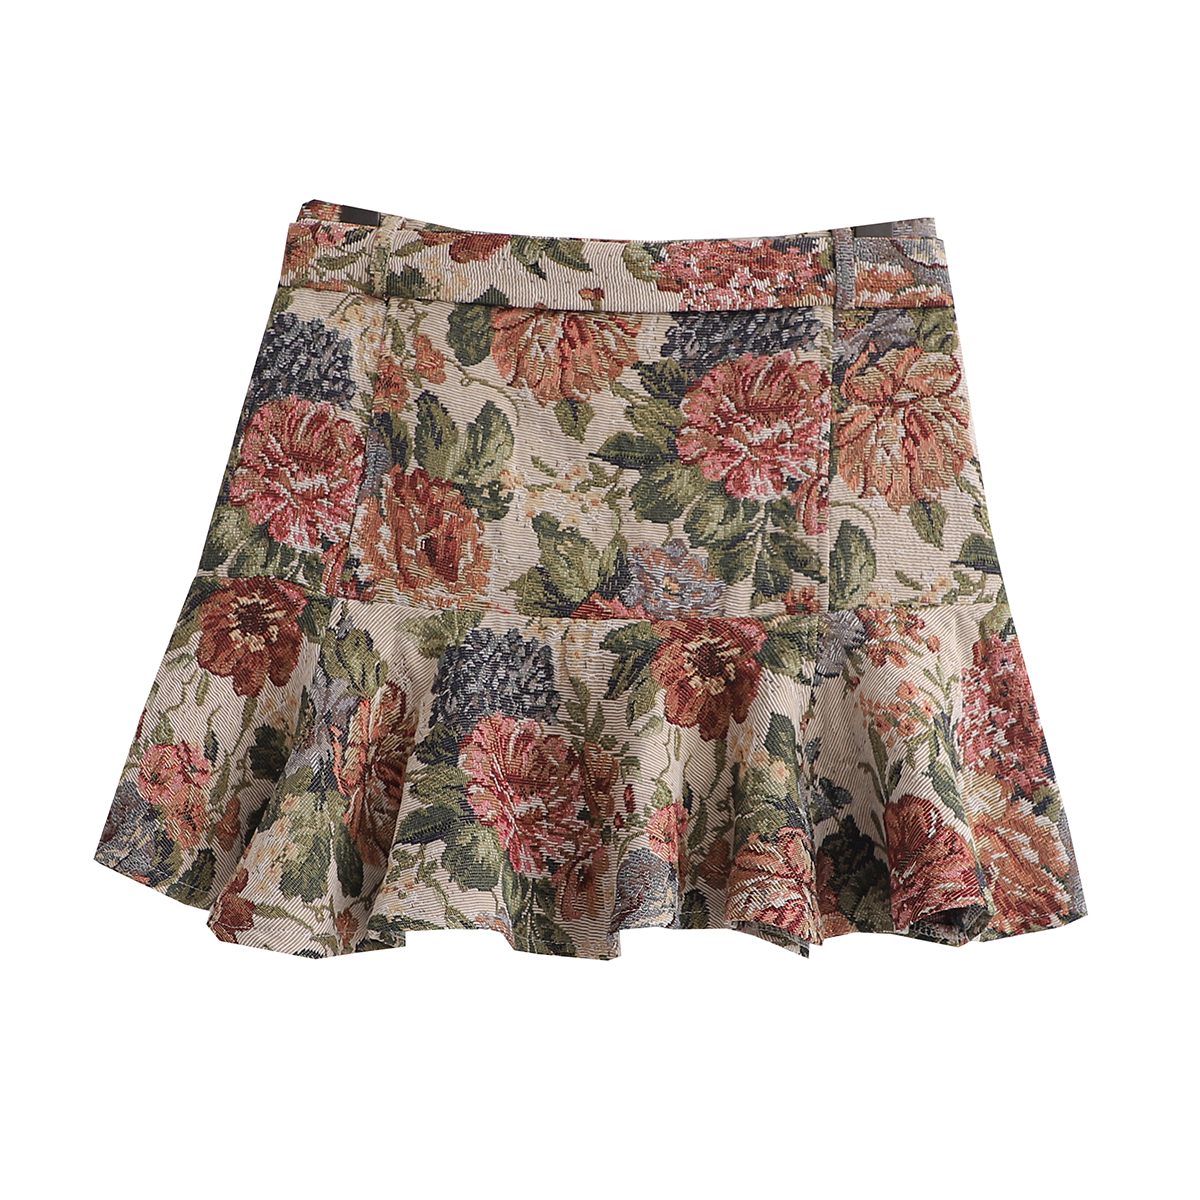 Retro High Waist Woolen Short Skirt - Skirts - Uniqistic.com